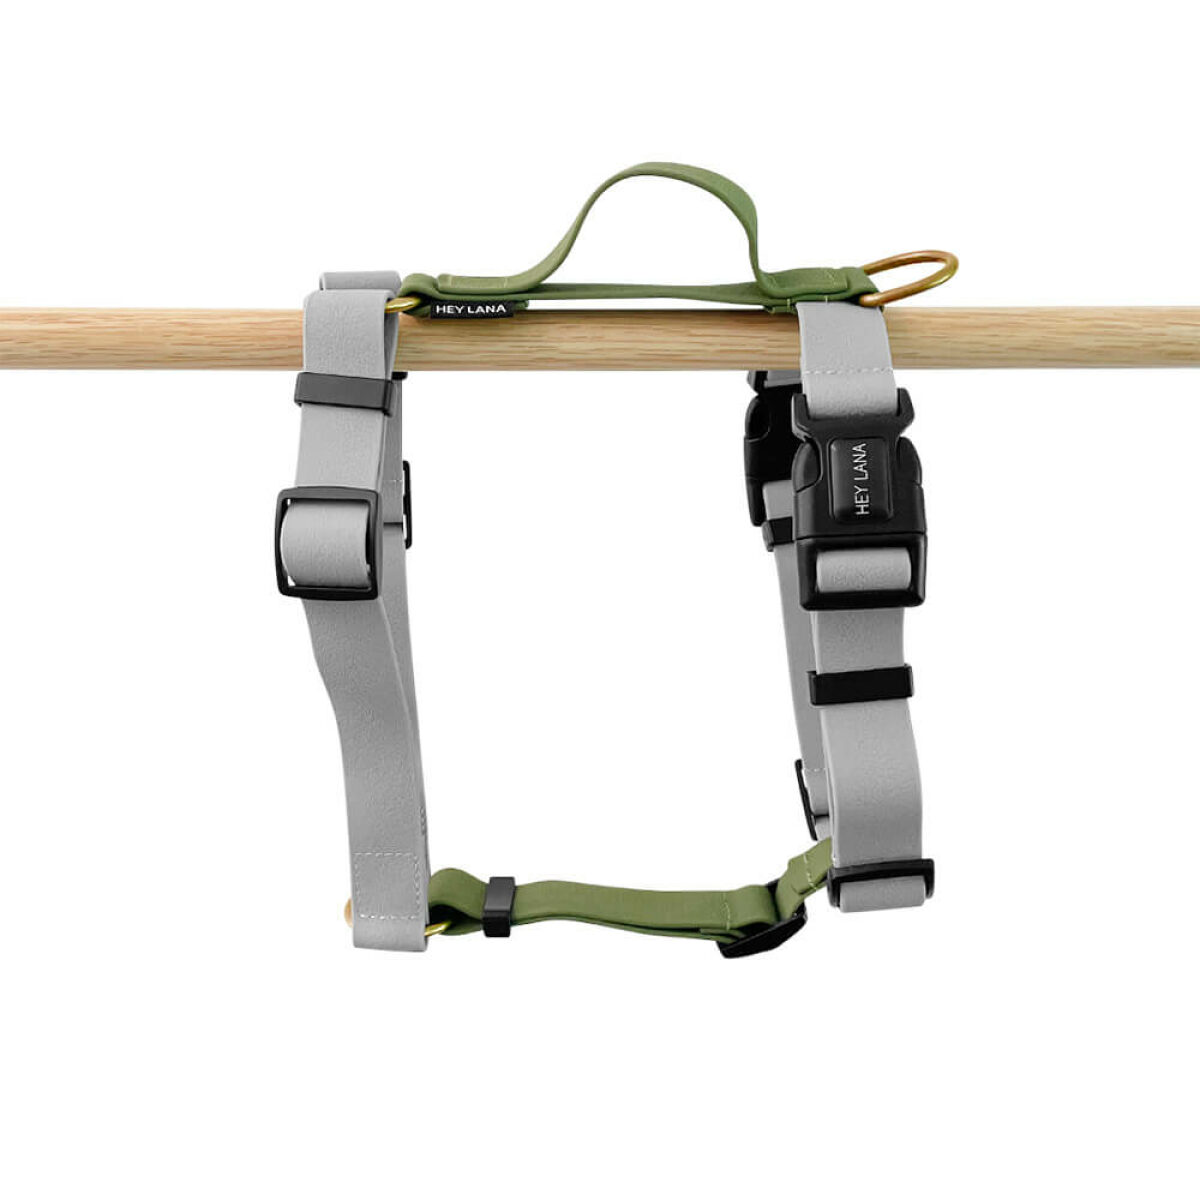 Dog harness - Outdoor FLEX is 5-way adjustable in gray/green